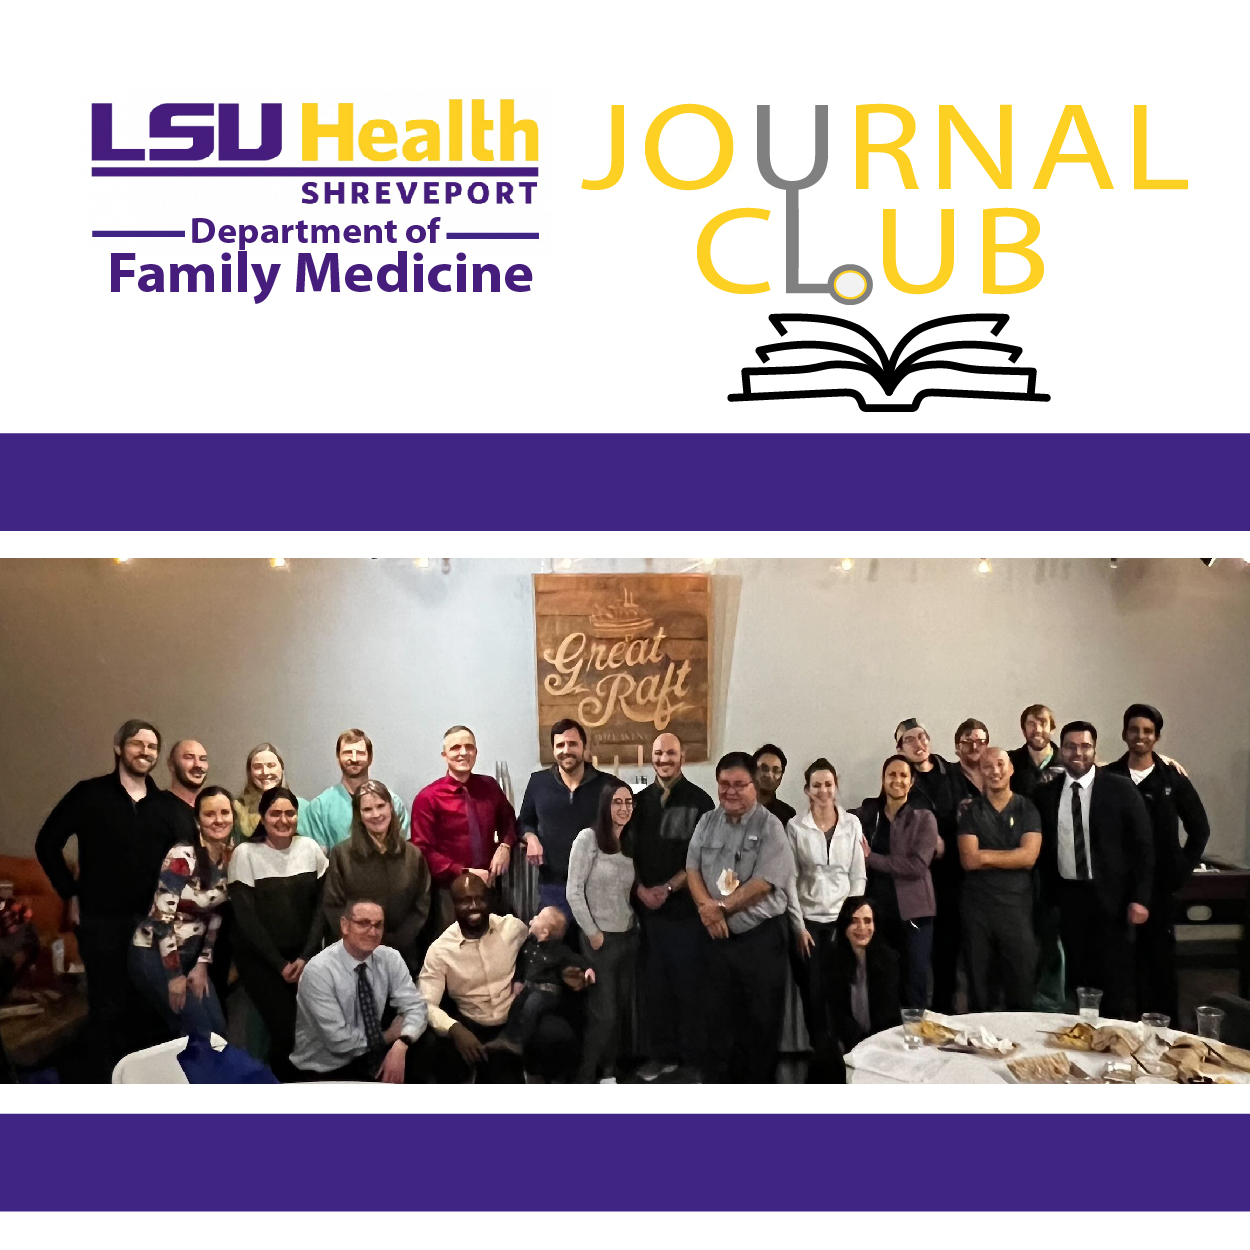 Journal Club Event thumbnail